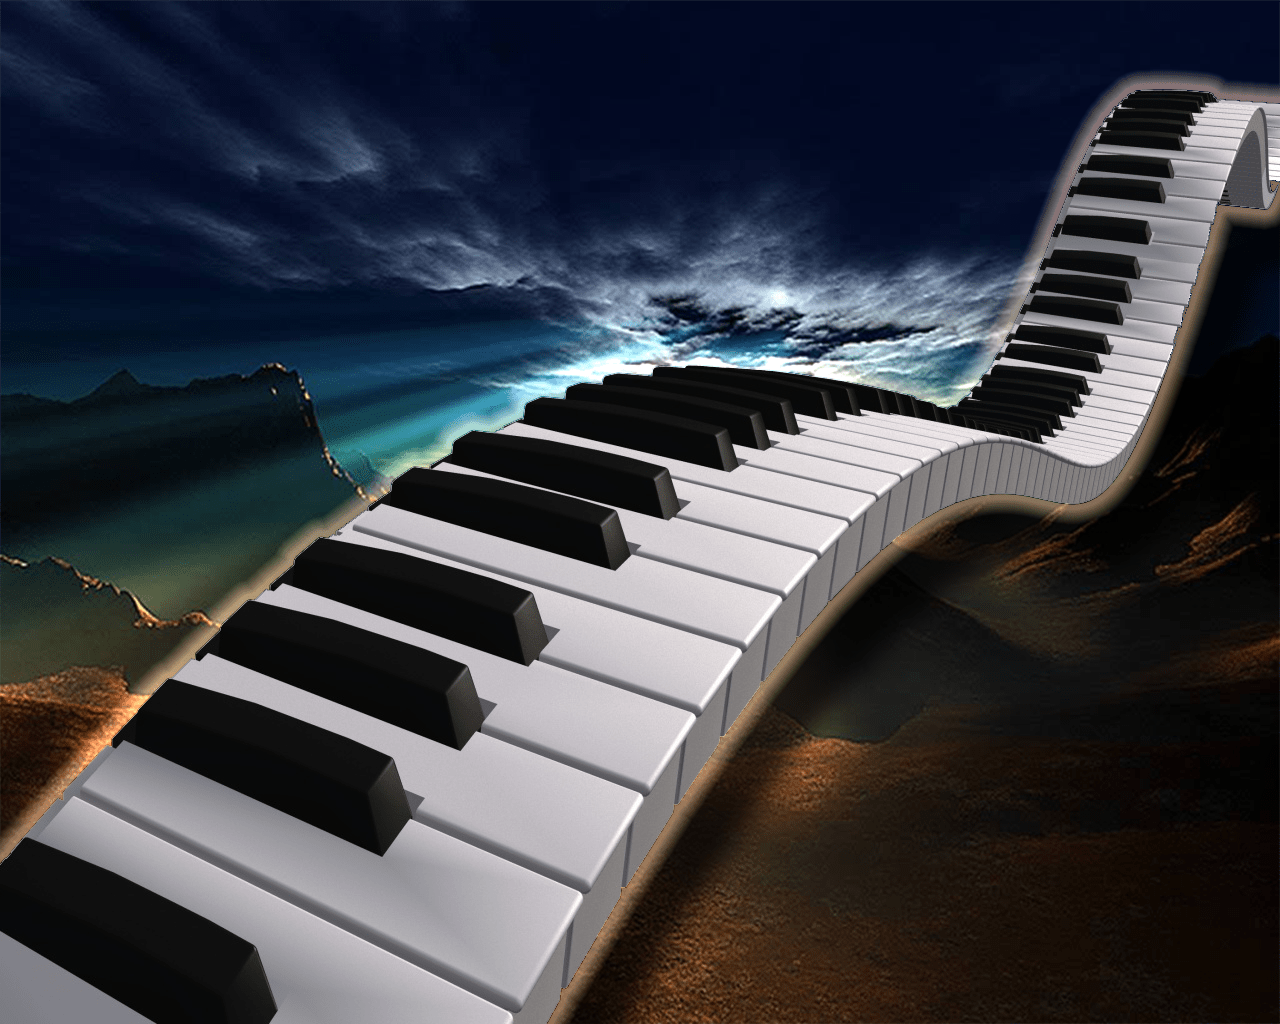 Piano Art Wallpapers - Top Free Piano Art Backgrounds - WallpaperAccess